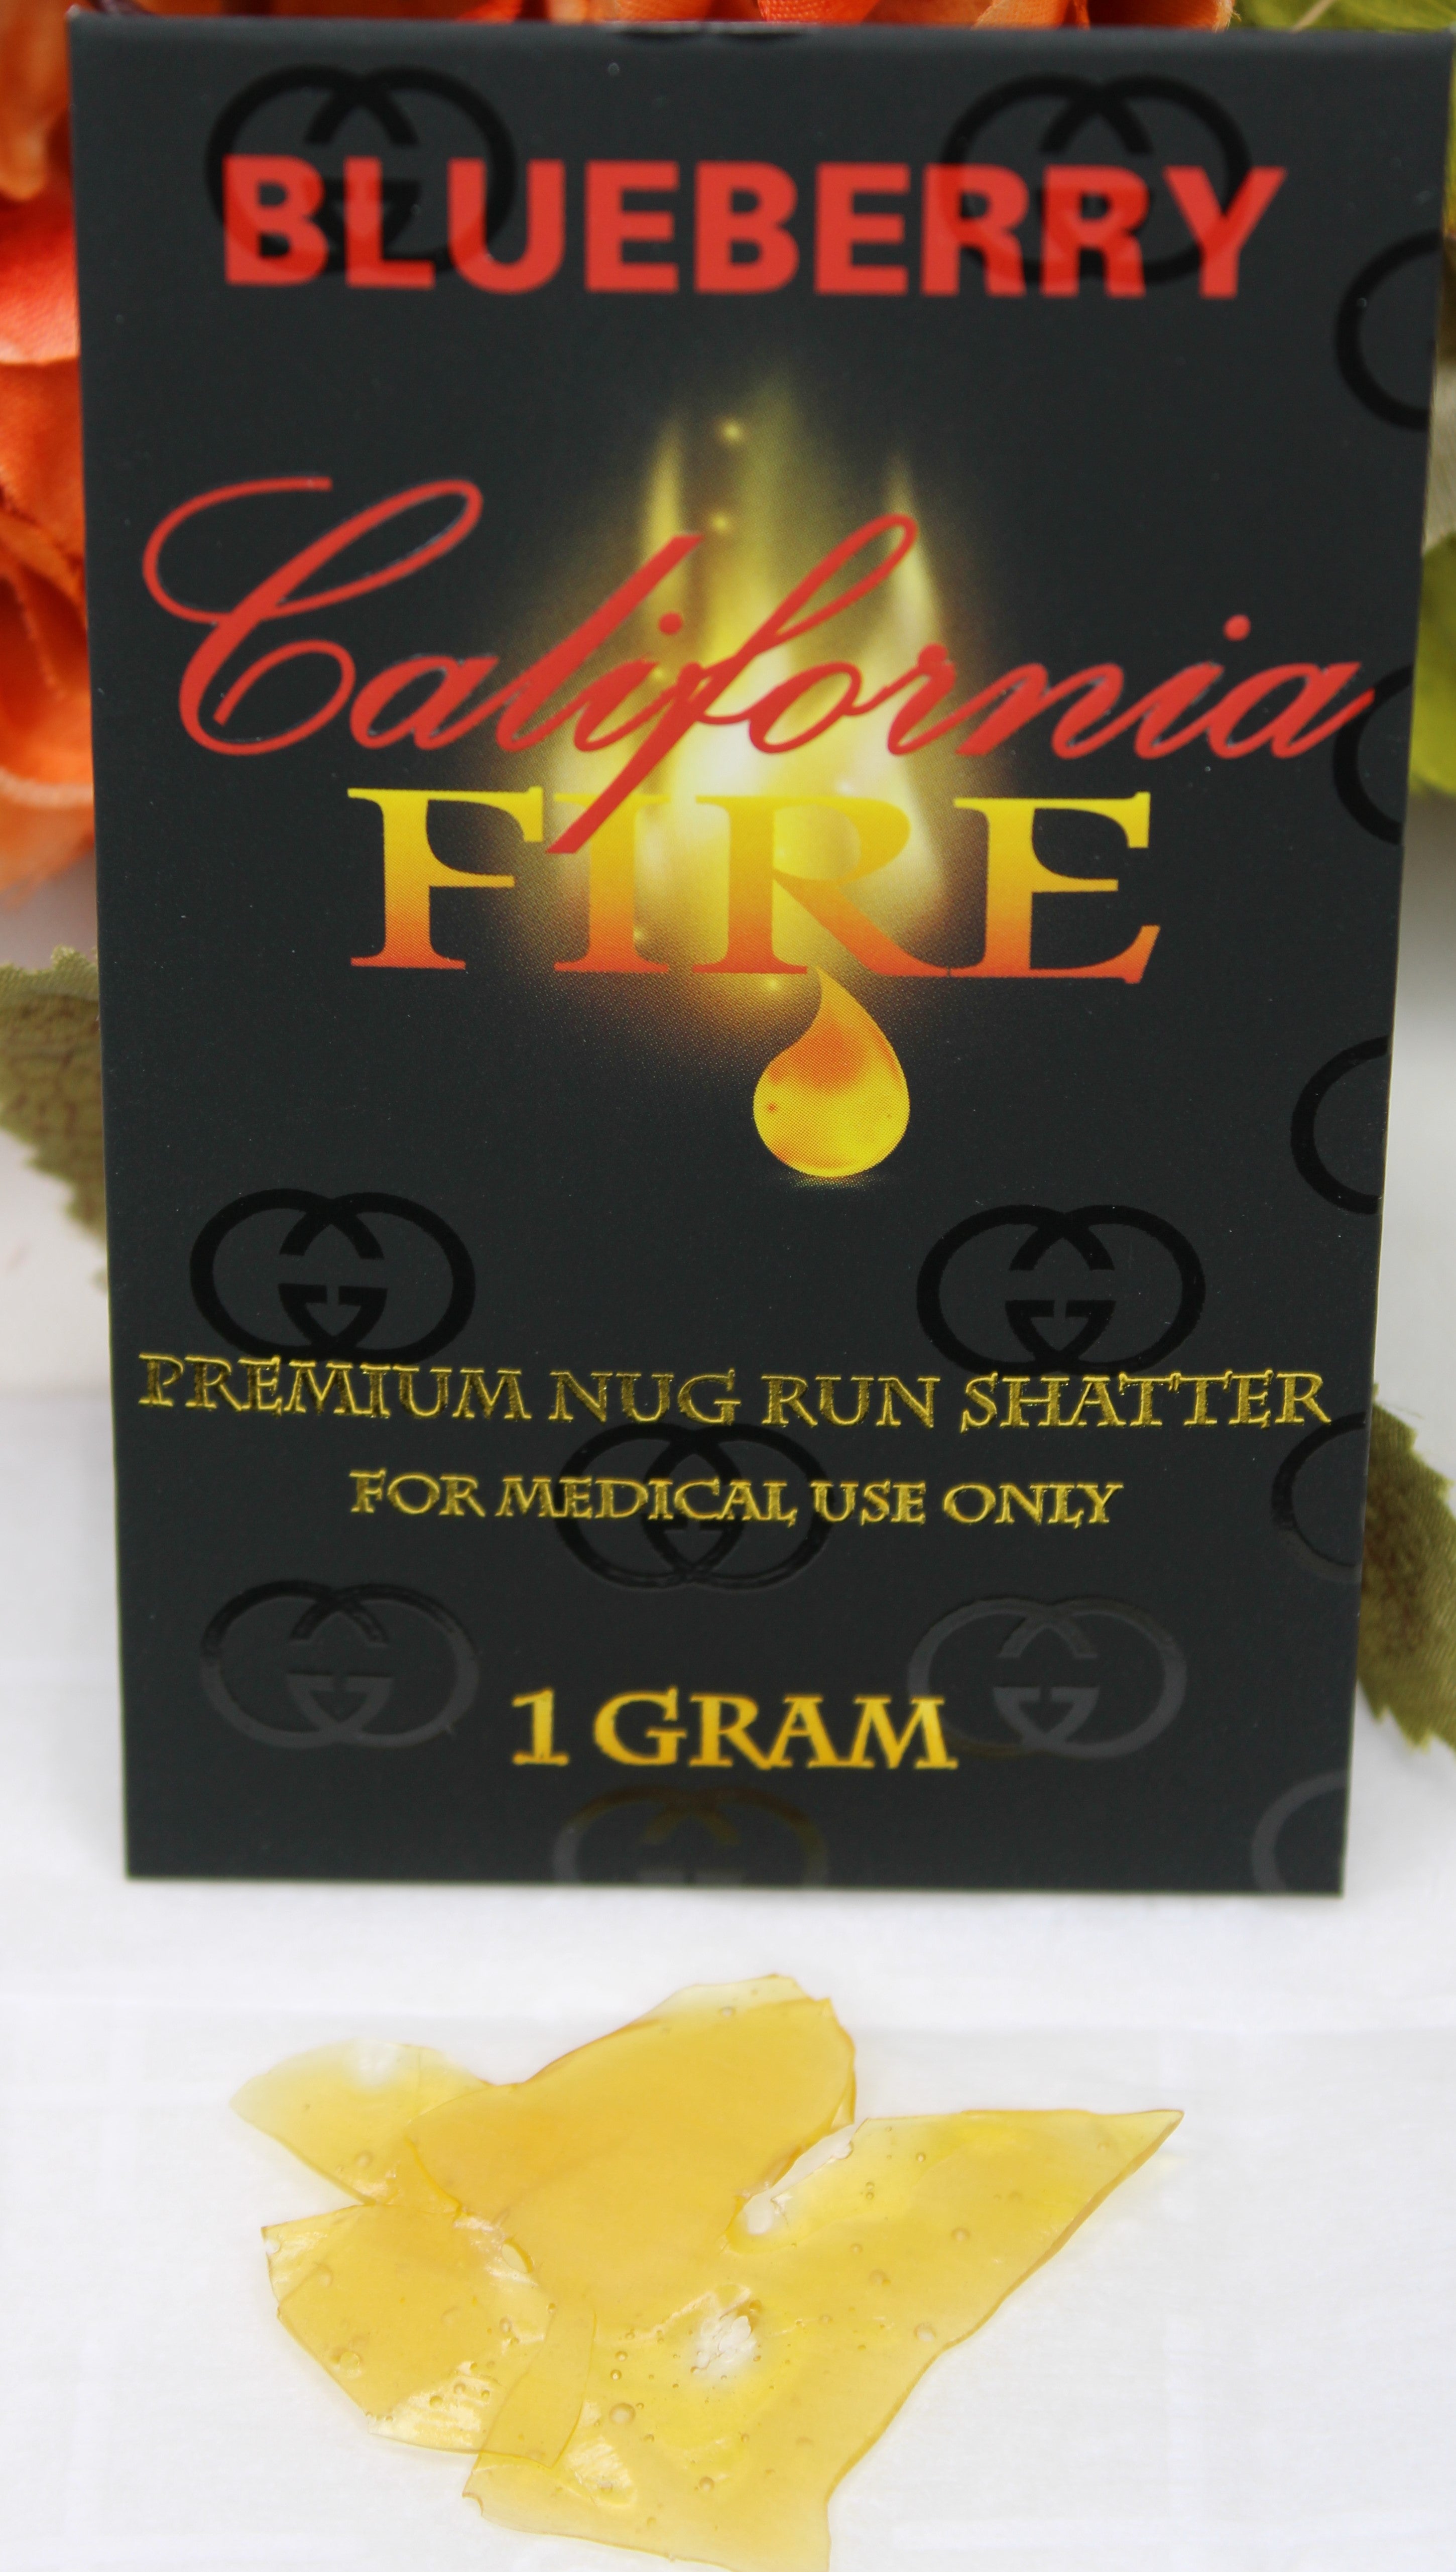 California Fire Premium Nug Run Shatter "Blueberry" (1g)